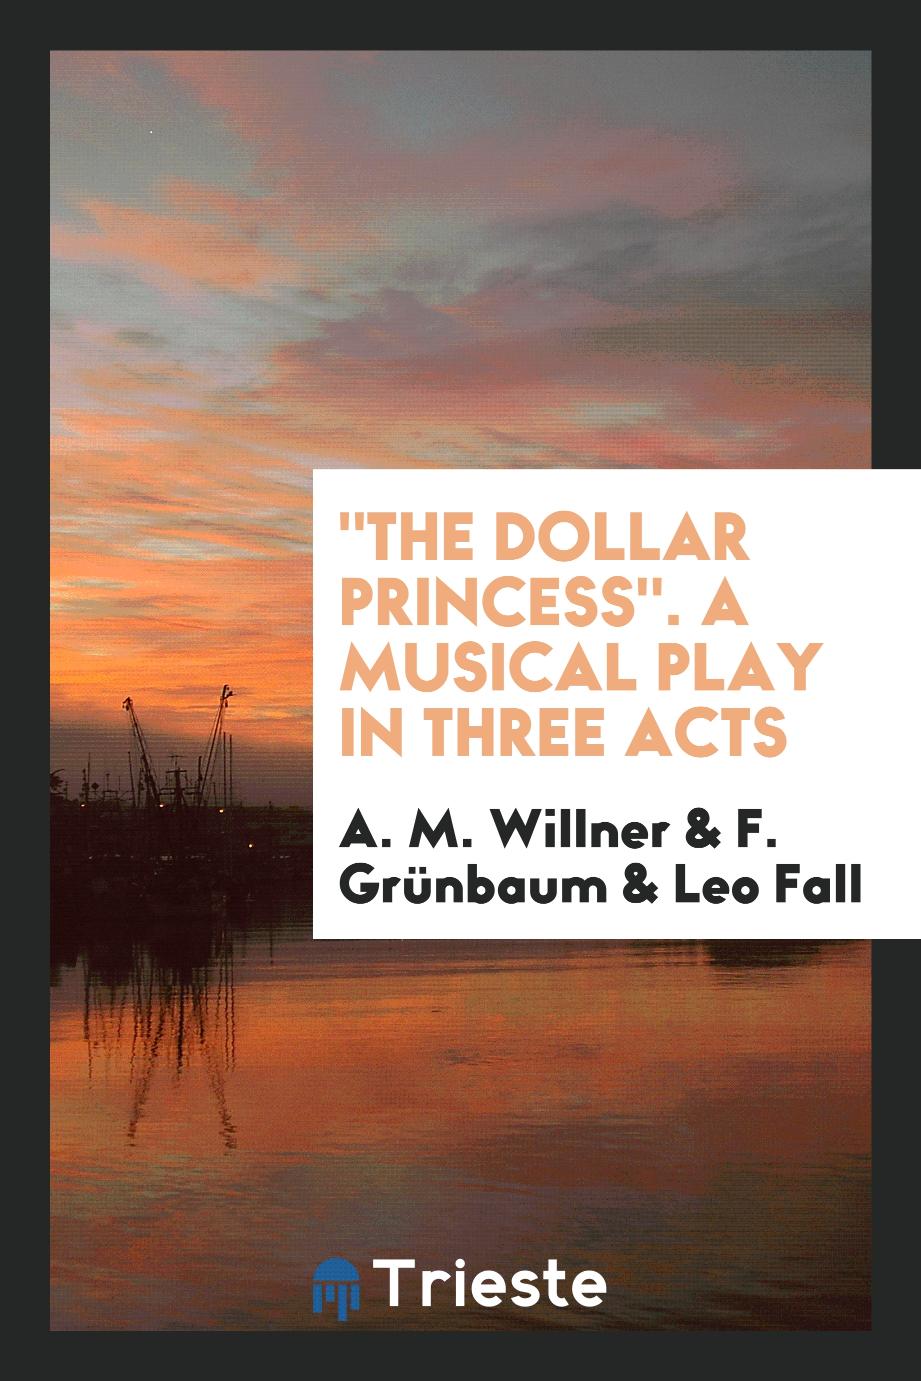 A. M. Willner, F. Grünbaum, Leo Fall - "The Dollar Princess". A Musical Play in Three Acts